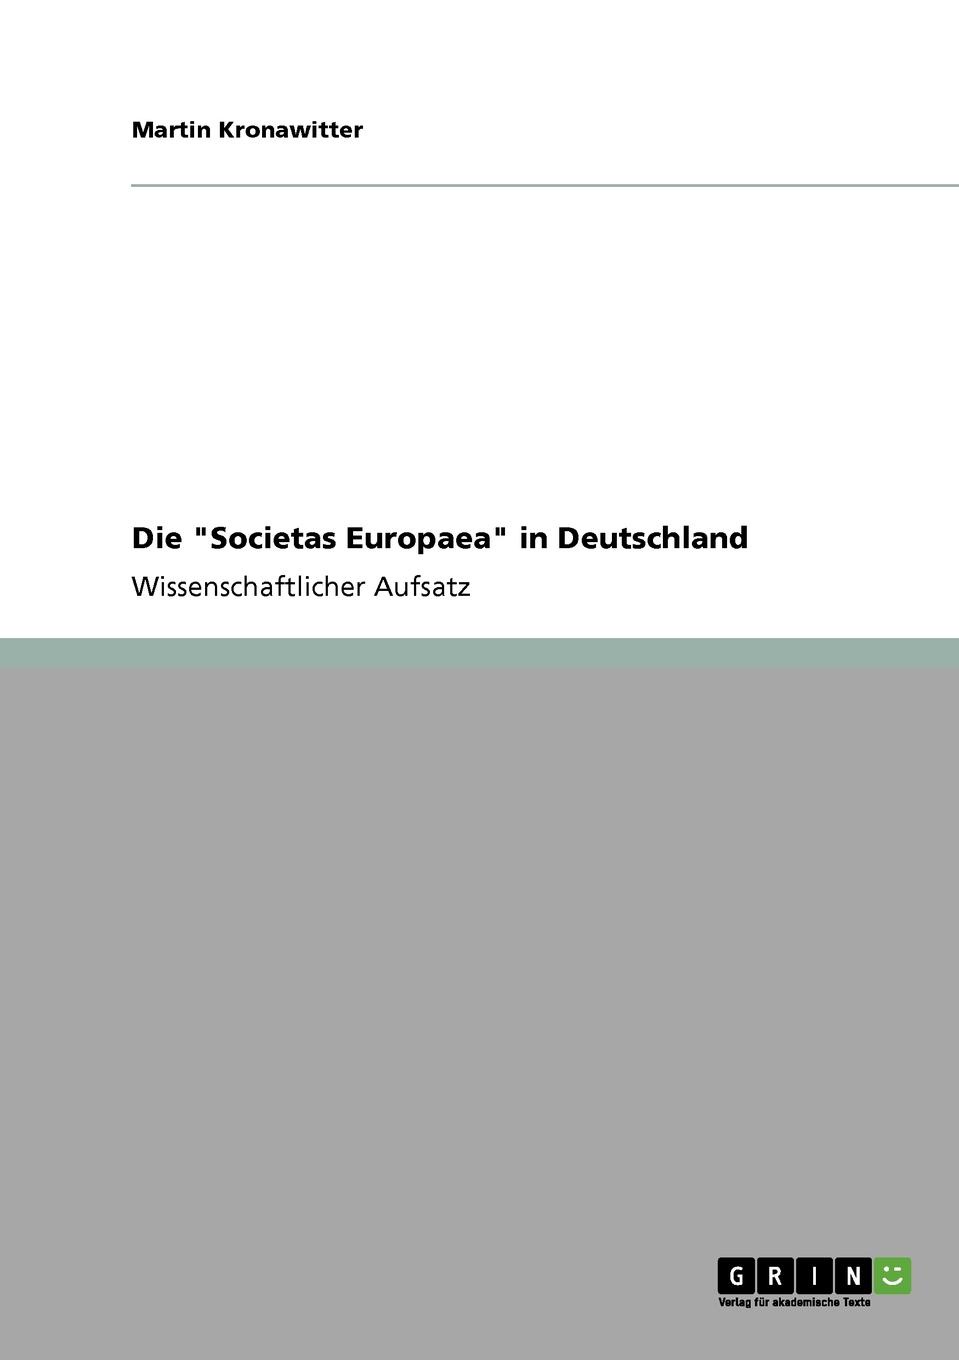 фото Die "Societas Europaea" in Deutschland